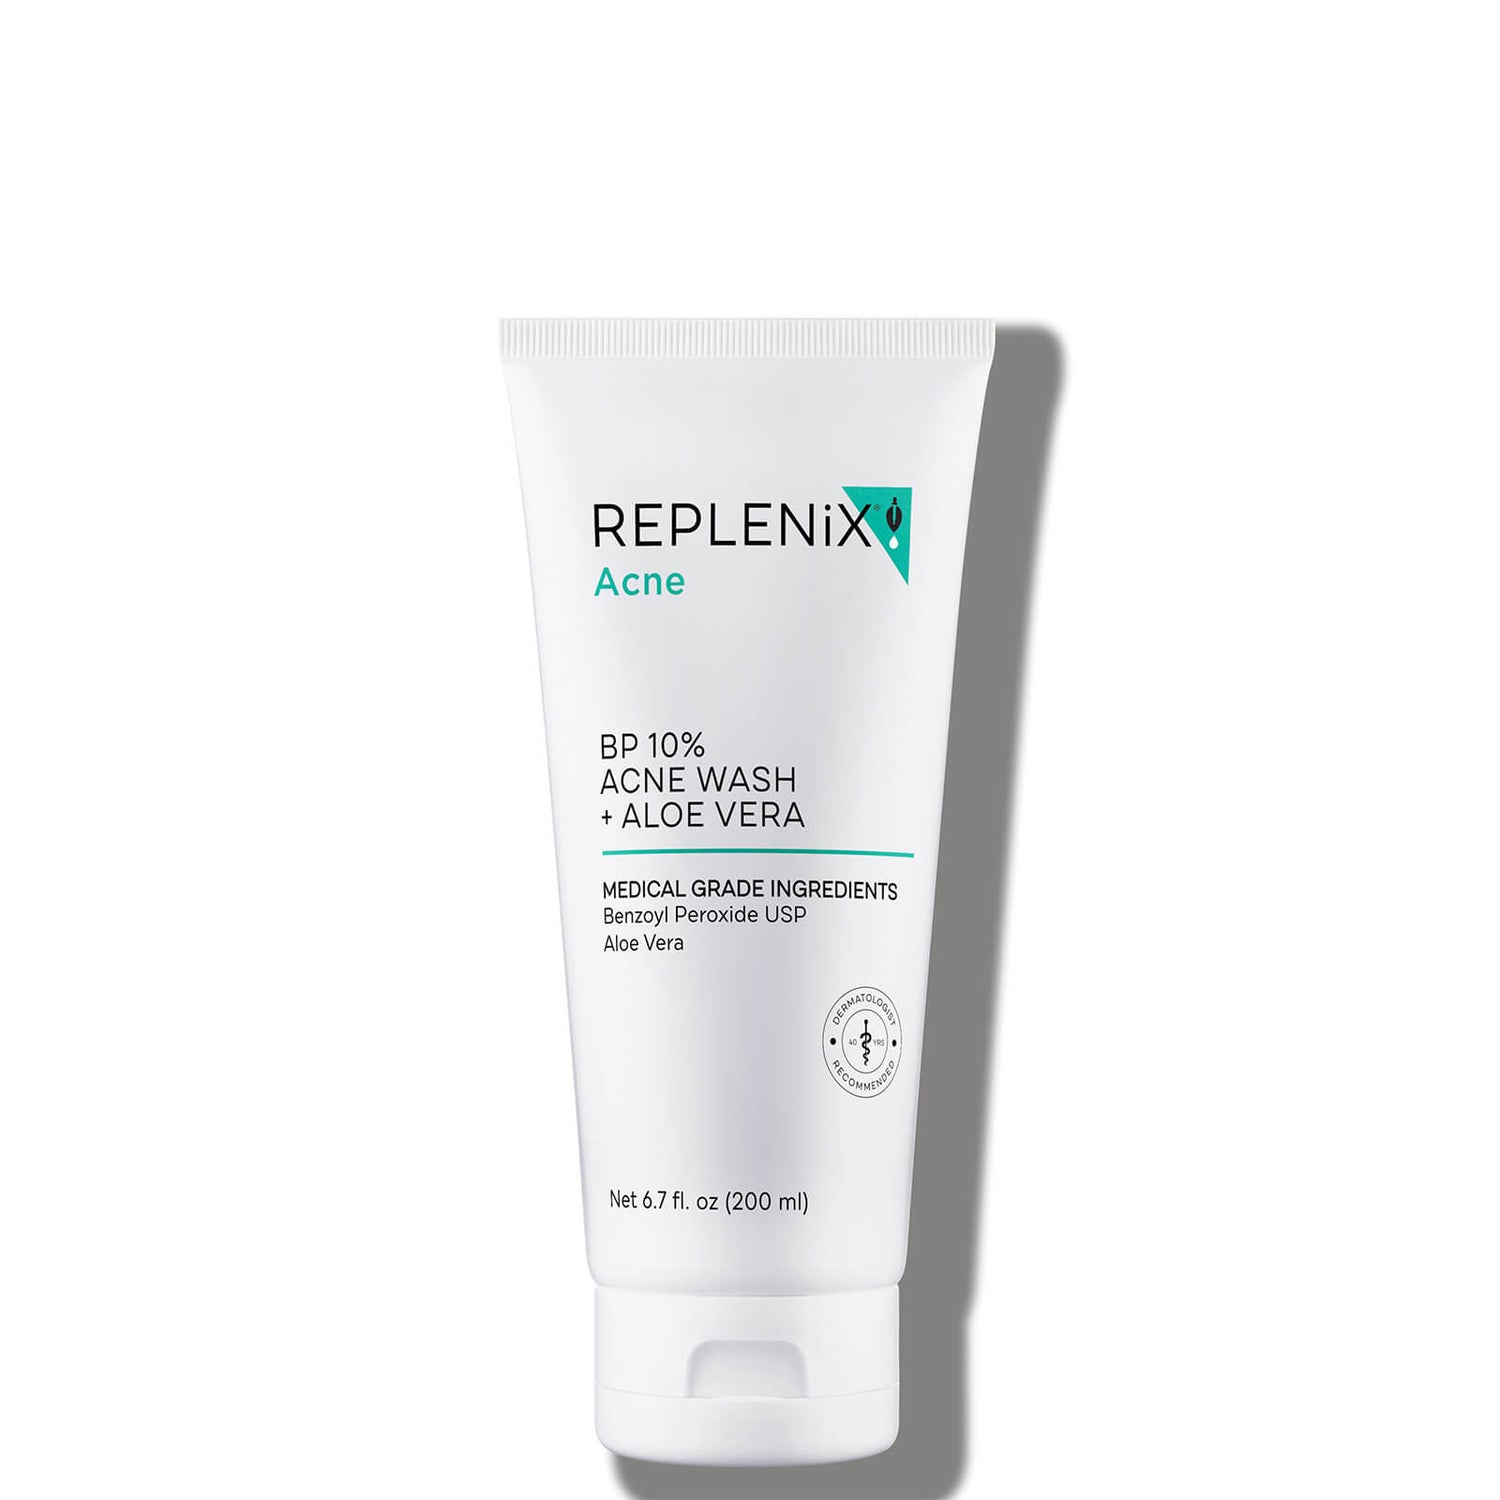 Replenix Benzoyl Peroxide Acne Wash 10 with Aloe Vera (6.7 fl. oz.)